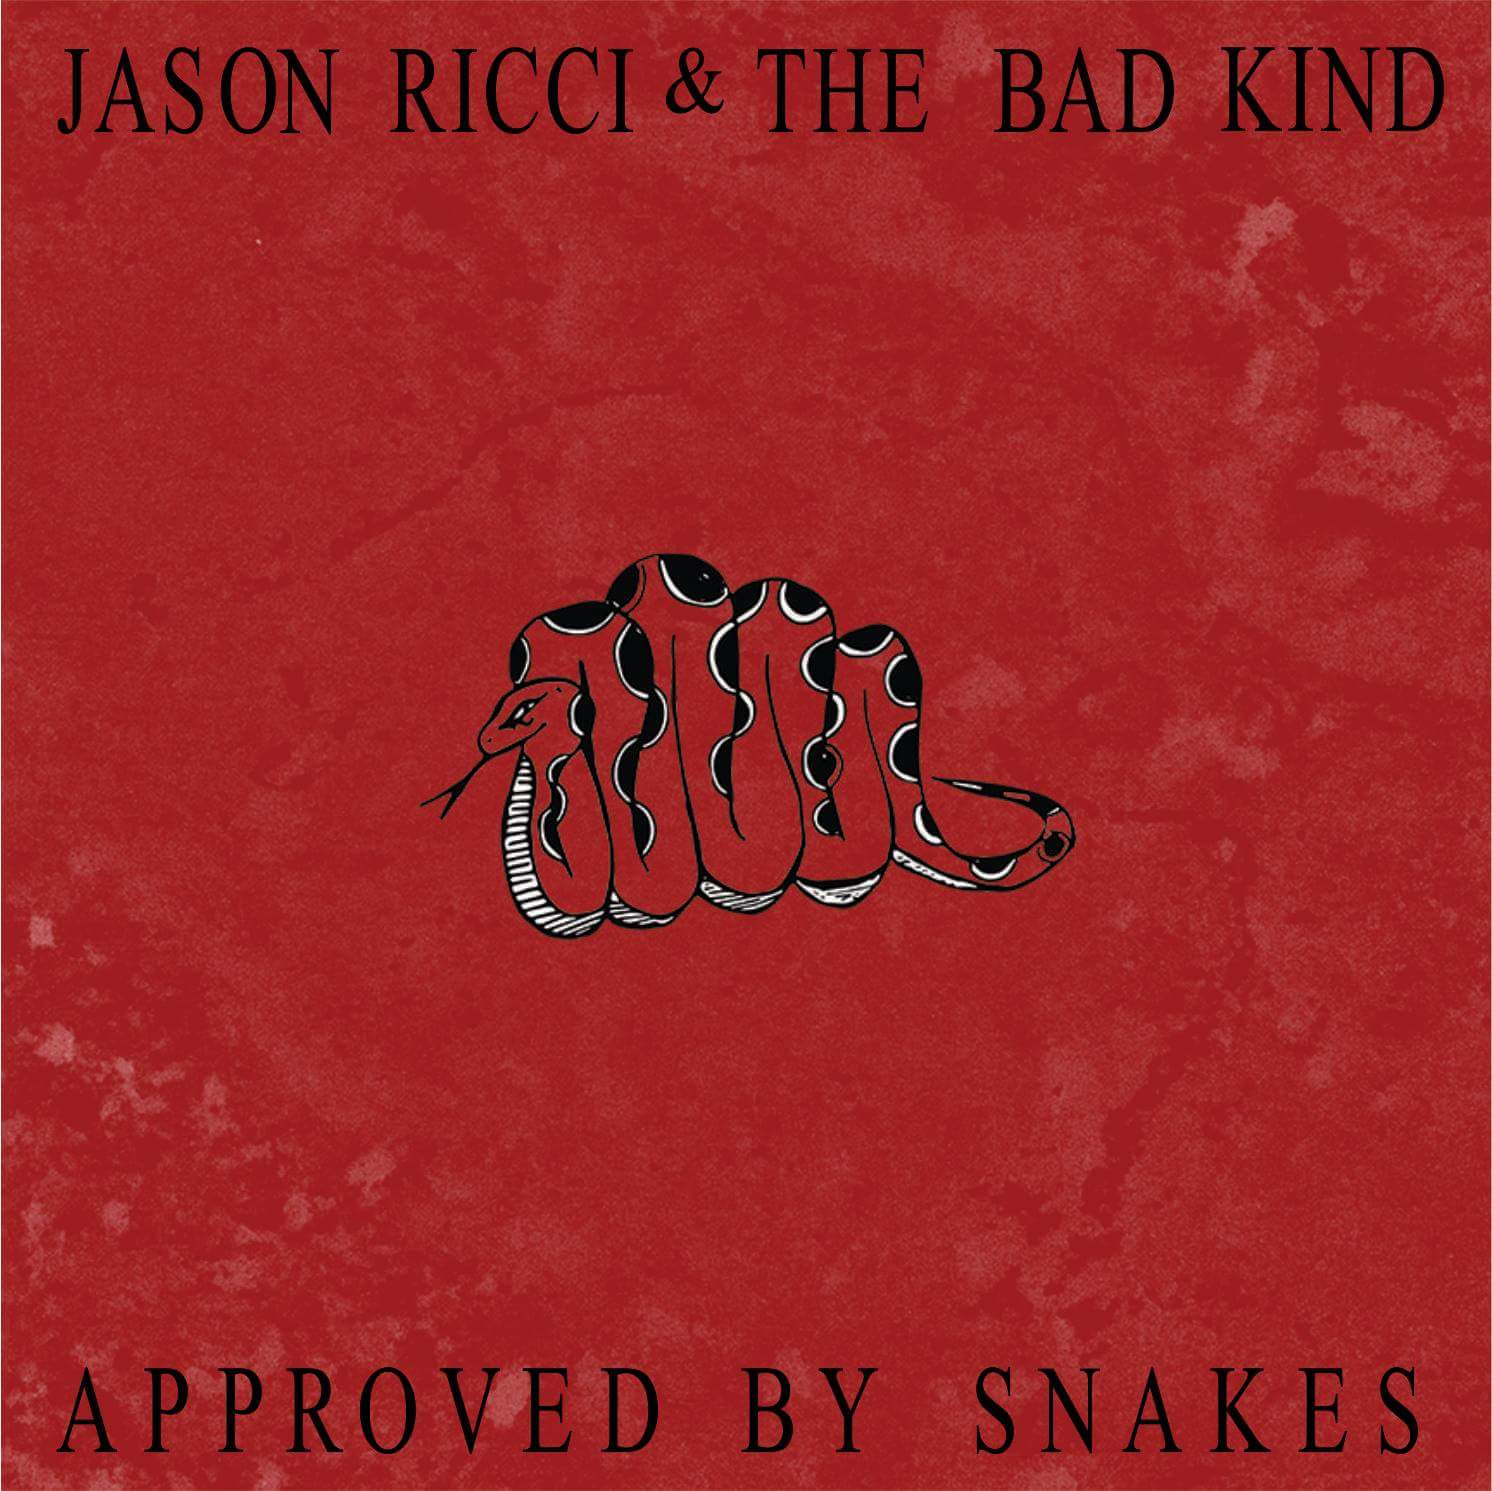 Kind lasting. Jason Ricci & the Bad kind. Jason Ricci - approved by Snakes (2017). Jason Ricci & the Bad kind 2019 my Chops are Rolling. Jason Ricci - feel good Funk (2002).